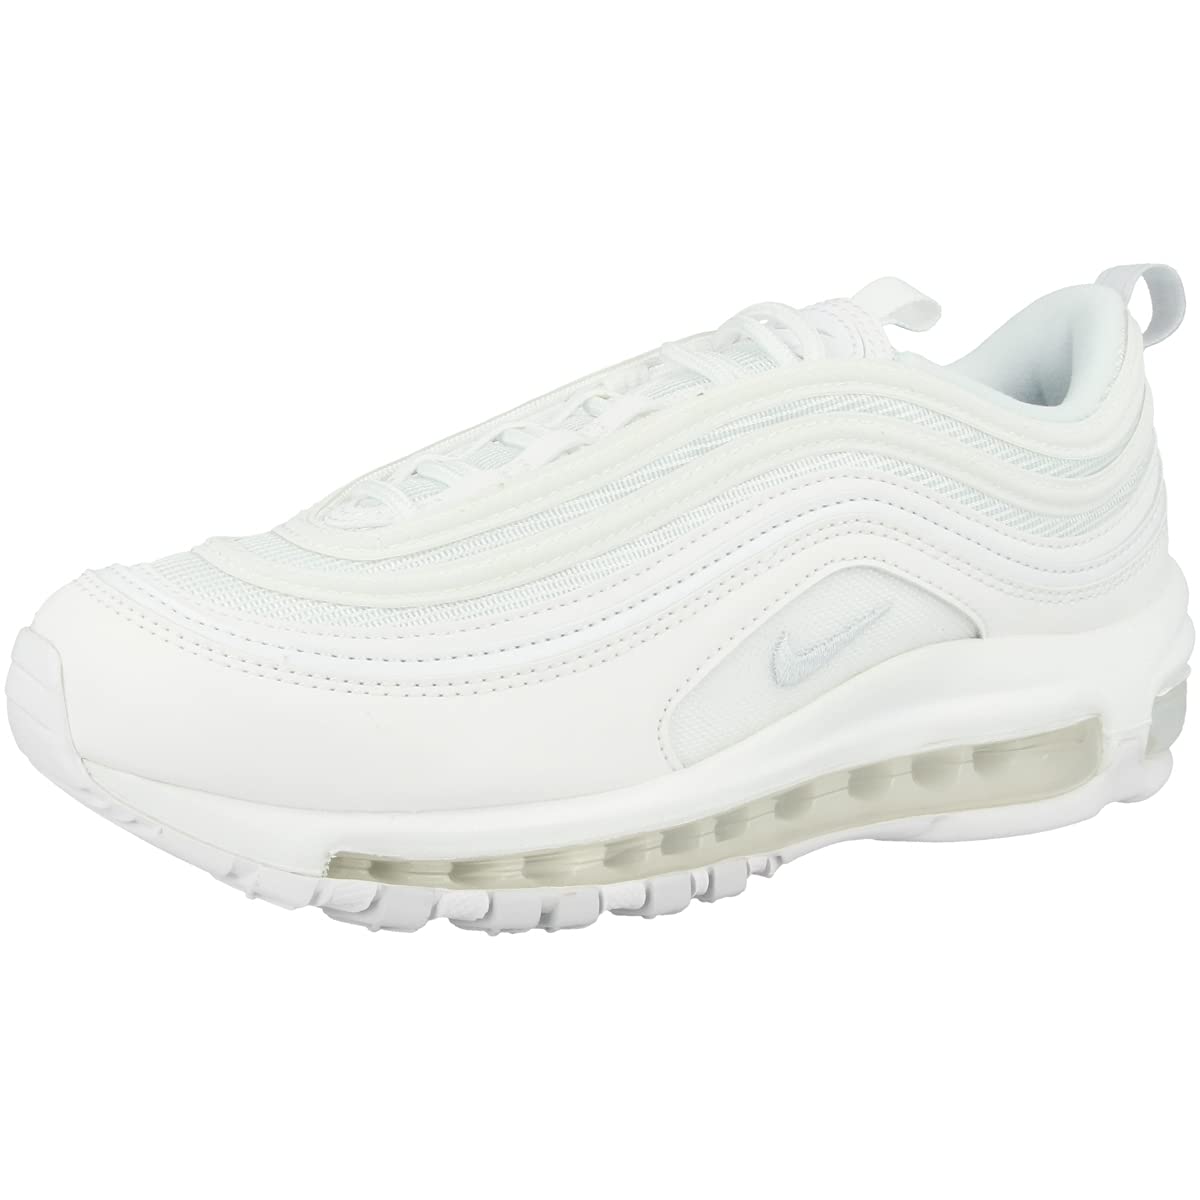 Nike womens Air Max 97 Shoes, White/White-metallic Silver, 9.5